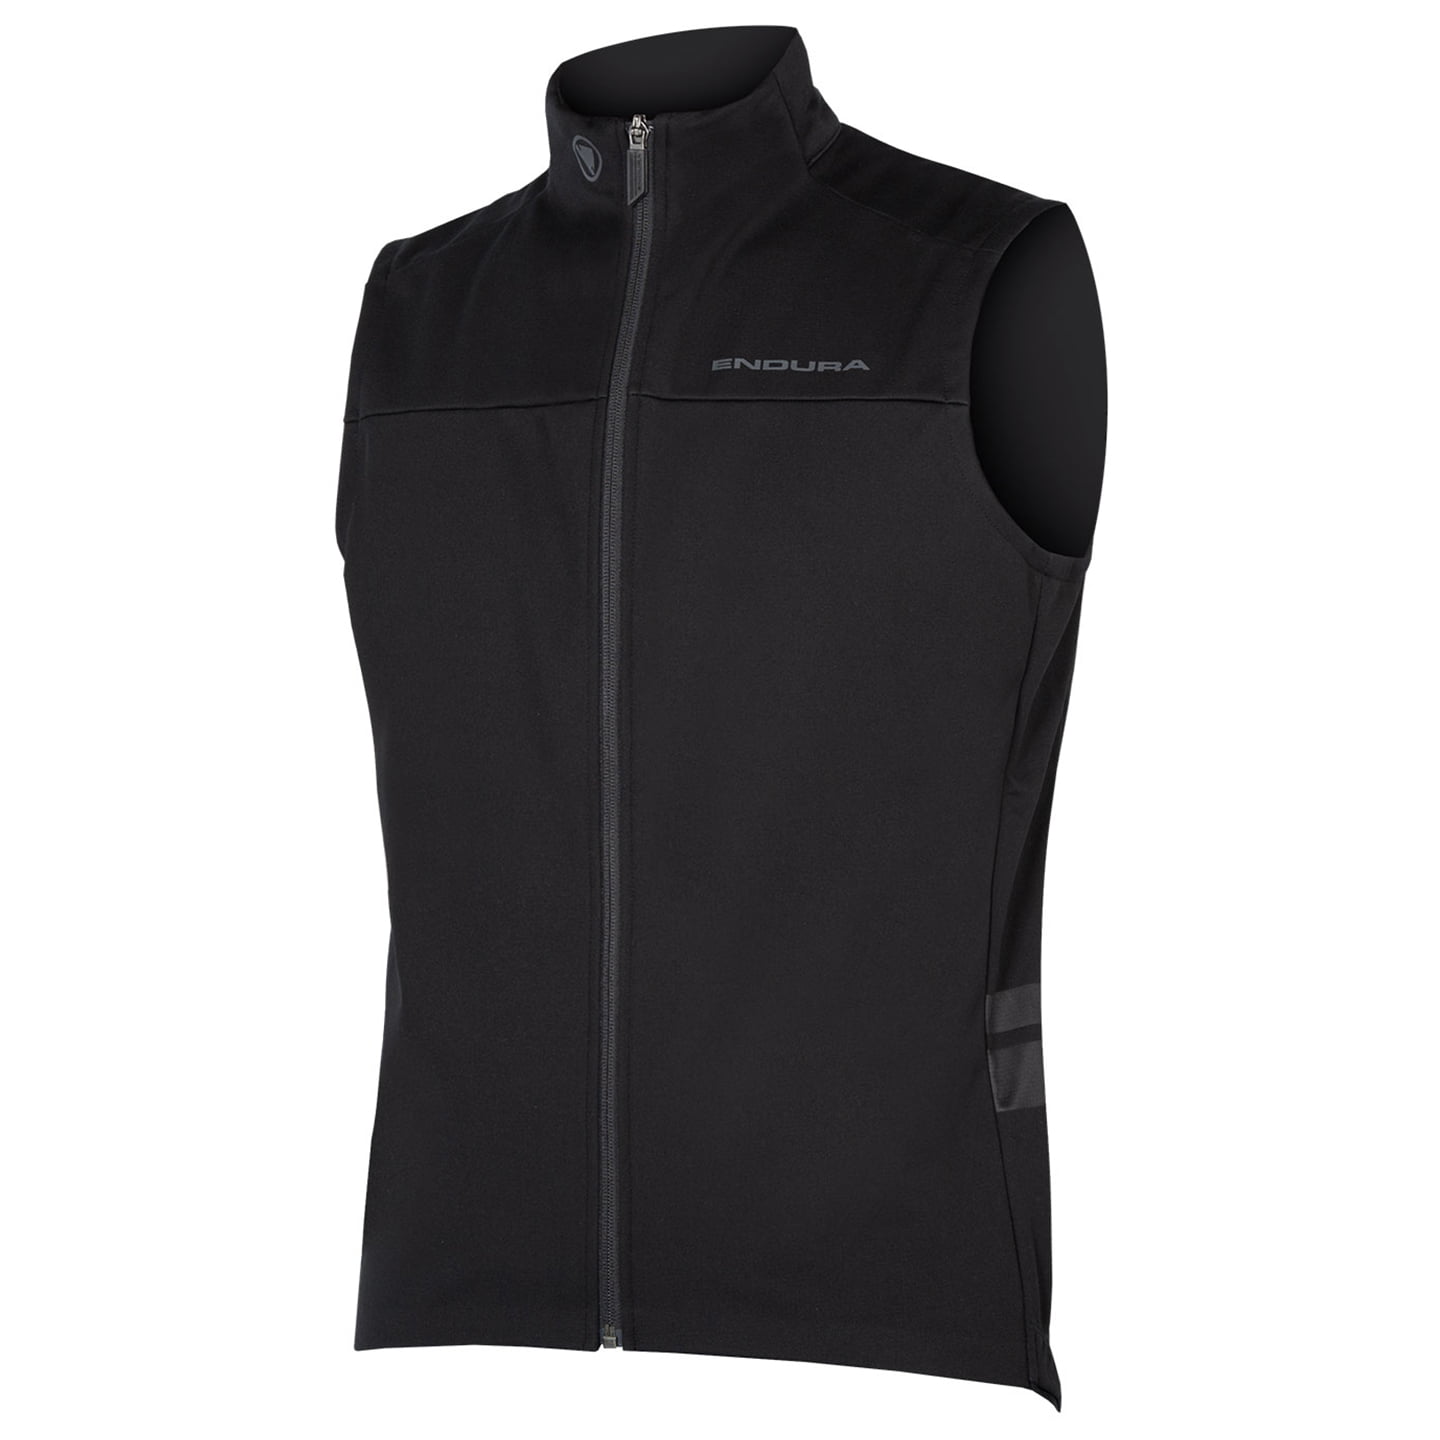 ENDURA Windchill II Thermal Vest Thermal Vest, for men, size S, Cycling vest, Bike gear